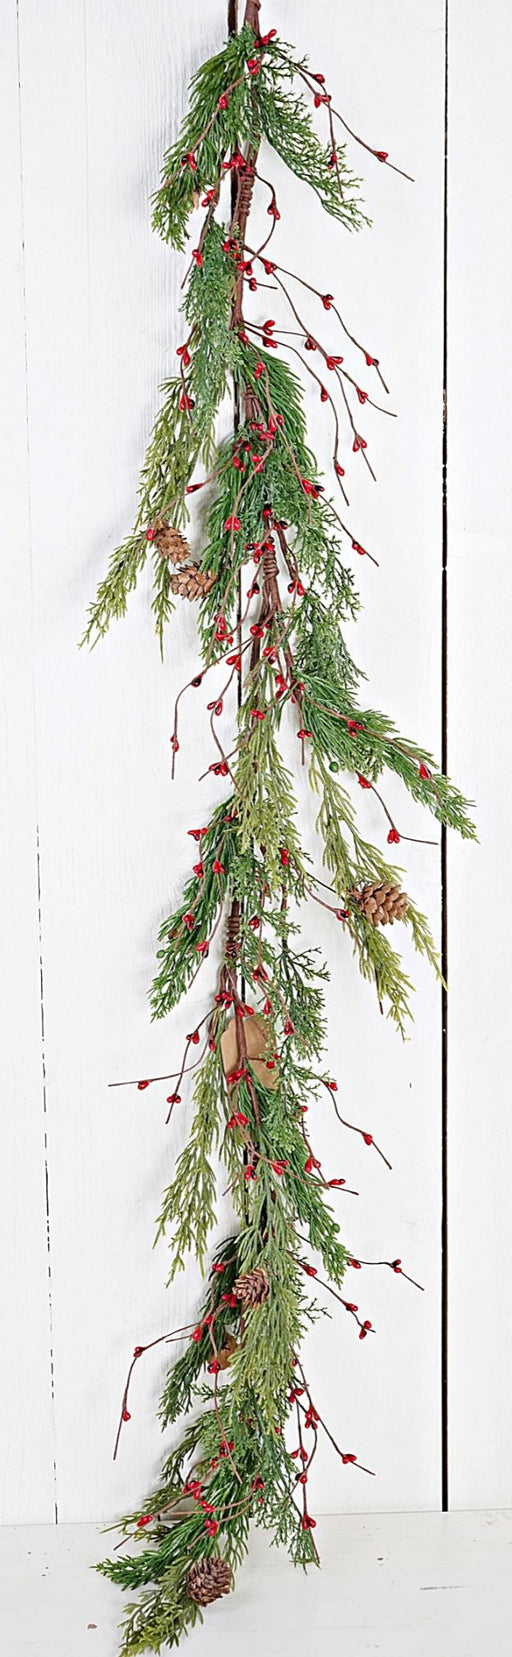 Evergreen Pine with Red Pips Garland - 4ft Christmas Decor Impressive Enterprises 